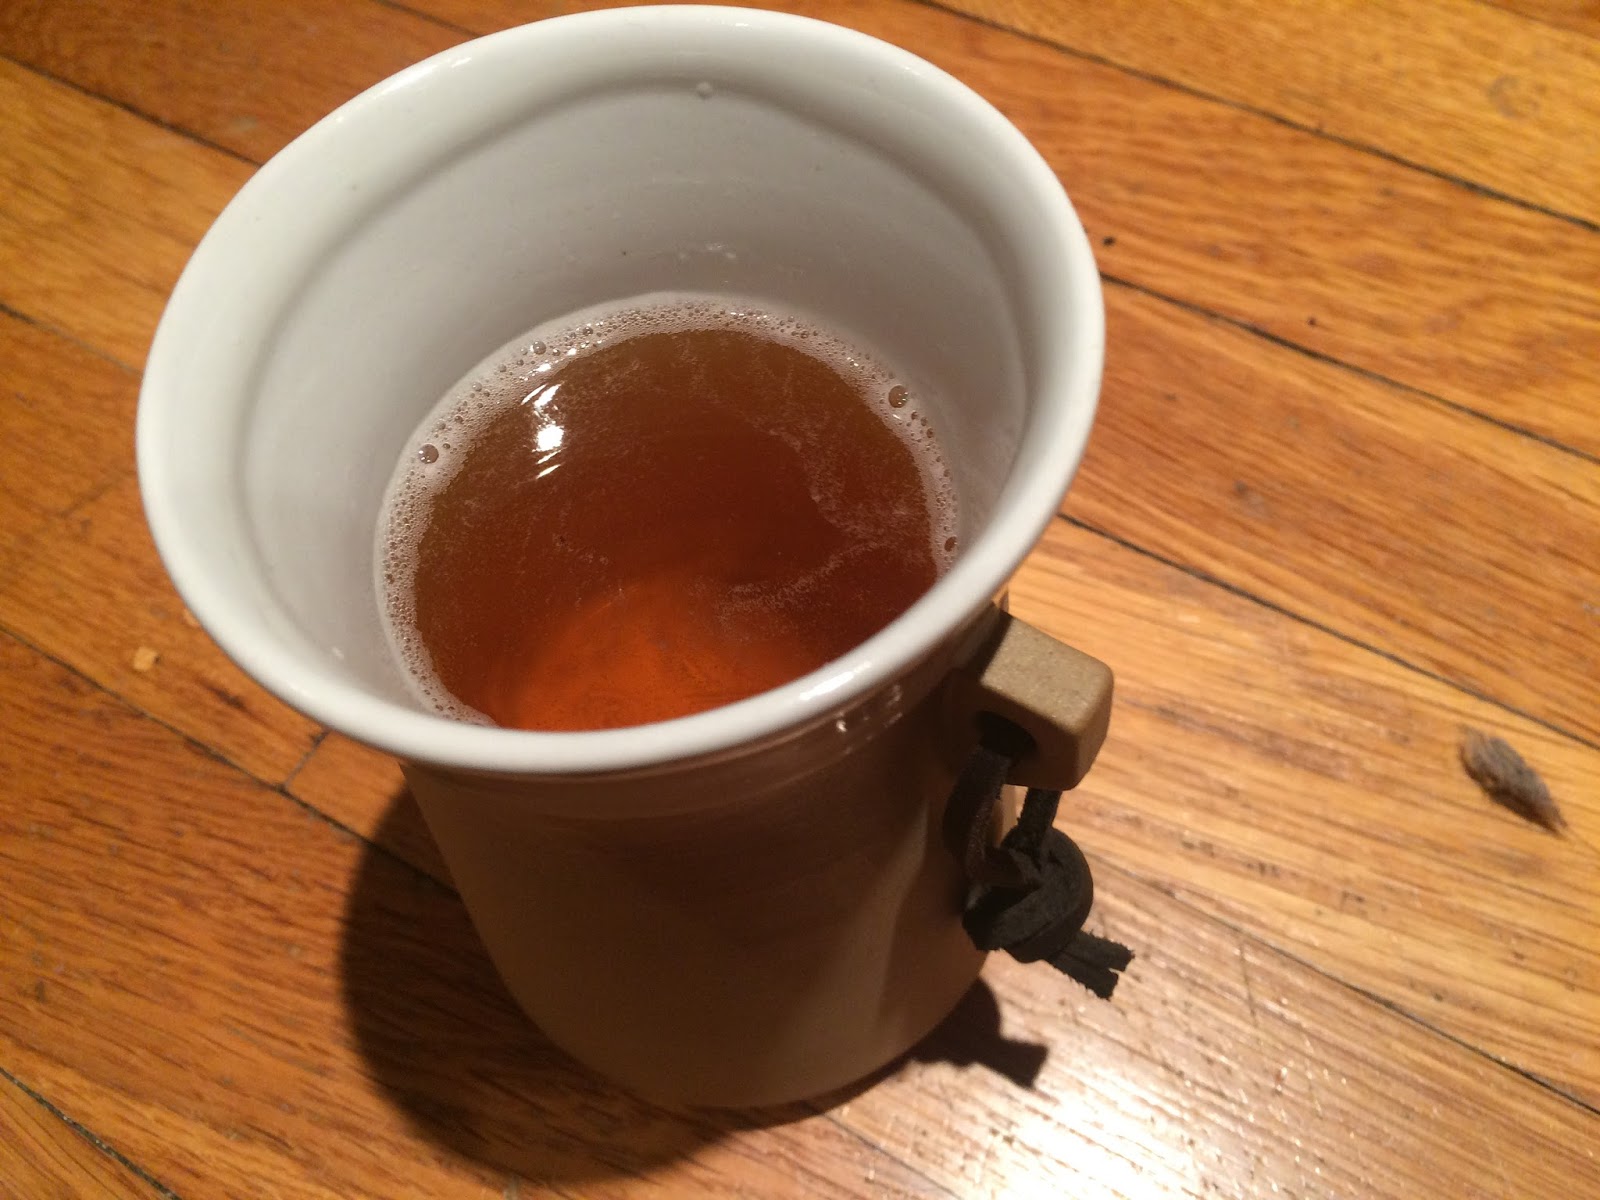 Along Came a Cider: Cider Review: Strongbow Honey Hard Apple Cider and my  33 Book Co. Cider Tasting Mug